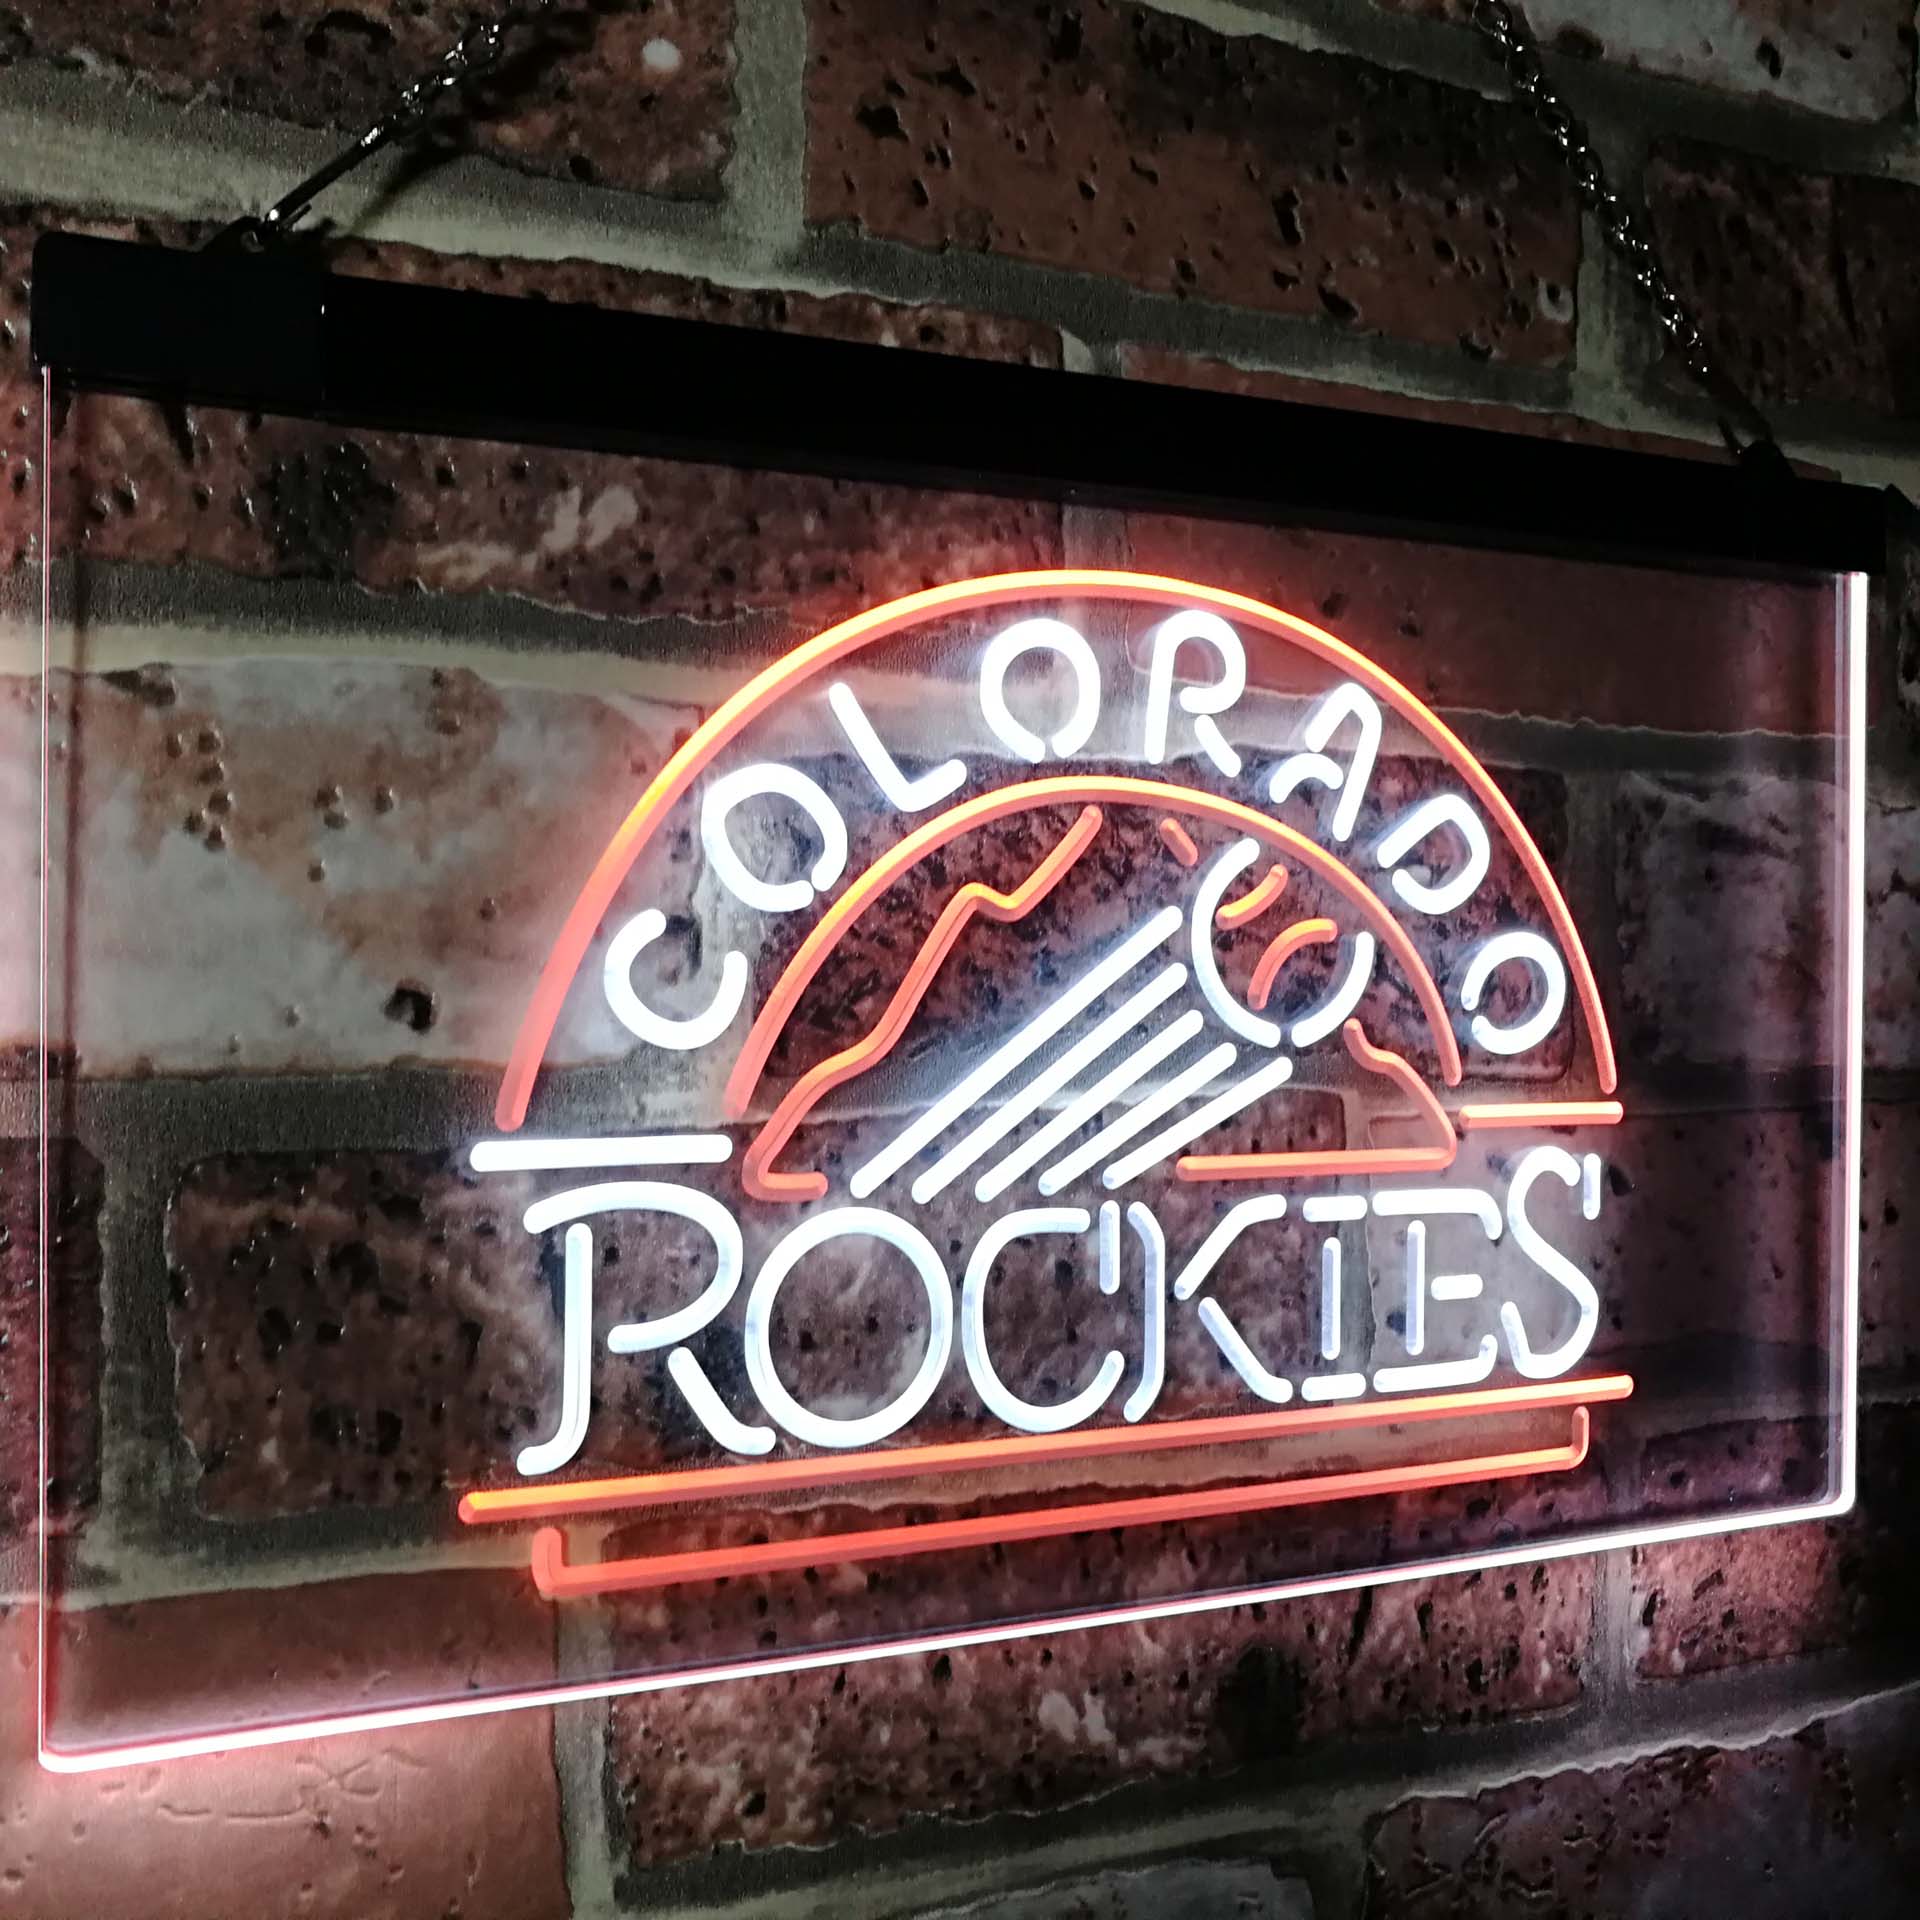 Colorados Sport Club League Team Rockiess LED Neon Sign